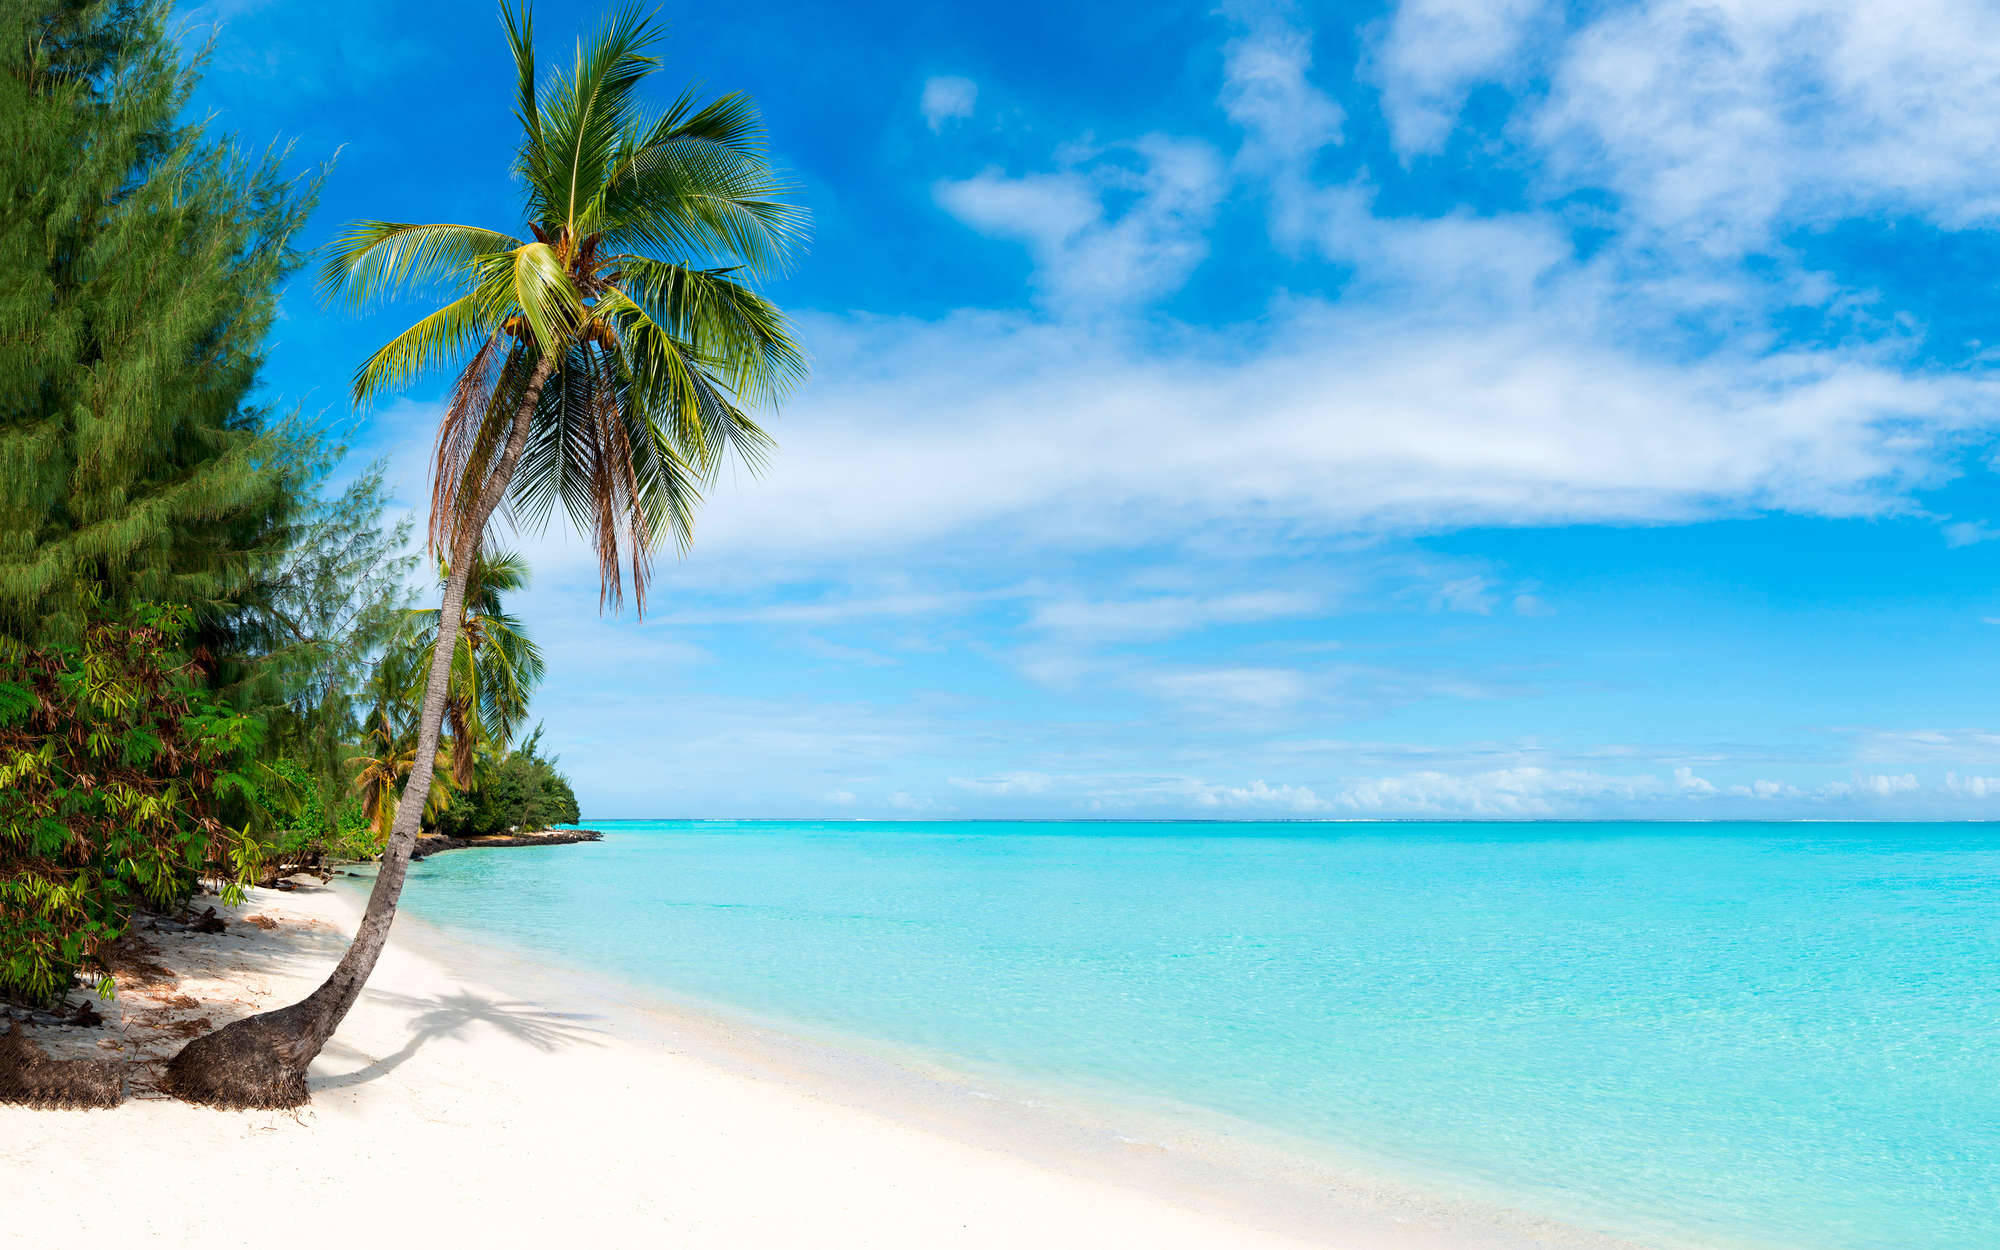             Fotomurali spiaggia sabbiosa con palma - Pile liscio premium
        